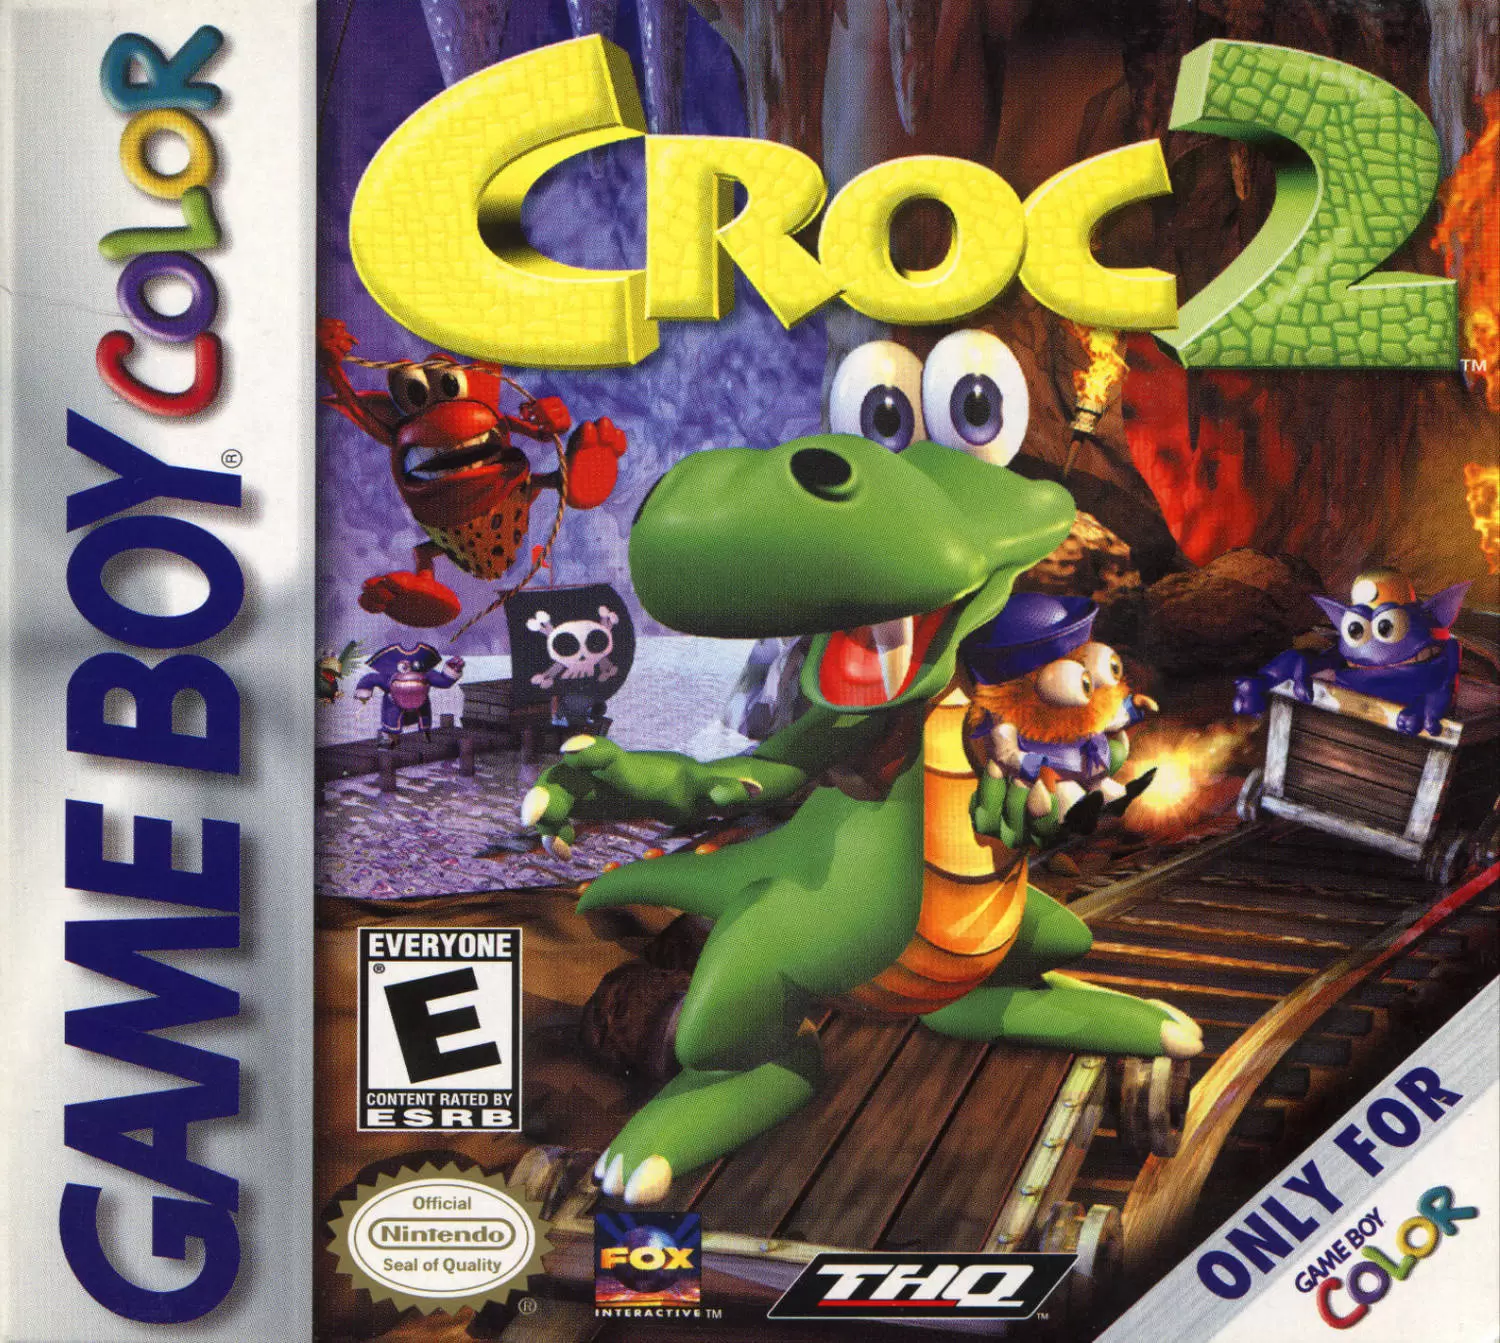 Game Boy Color Games - Croc 2